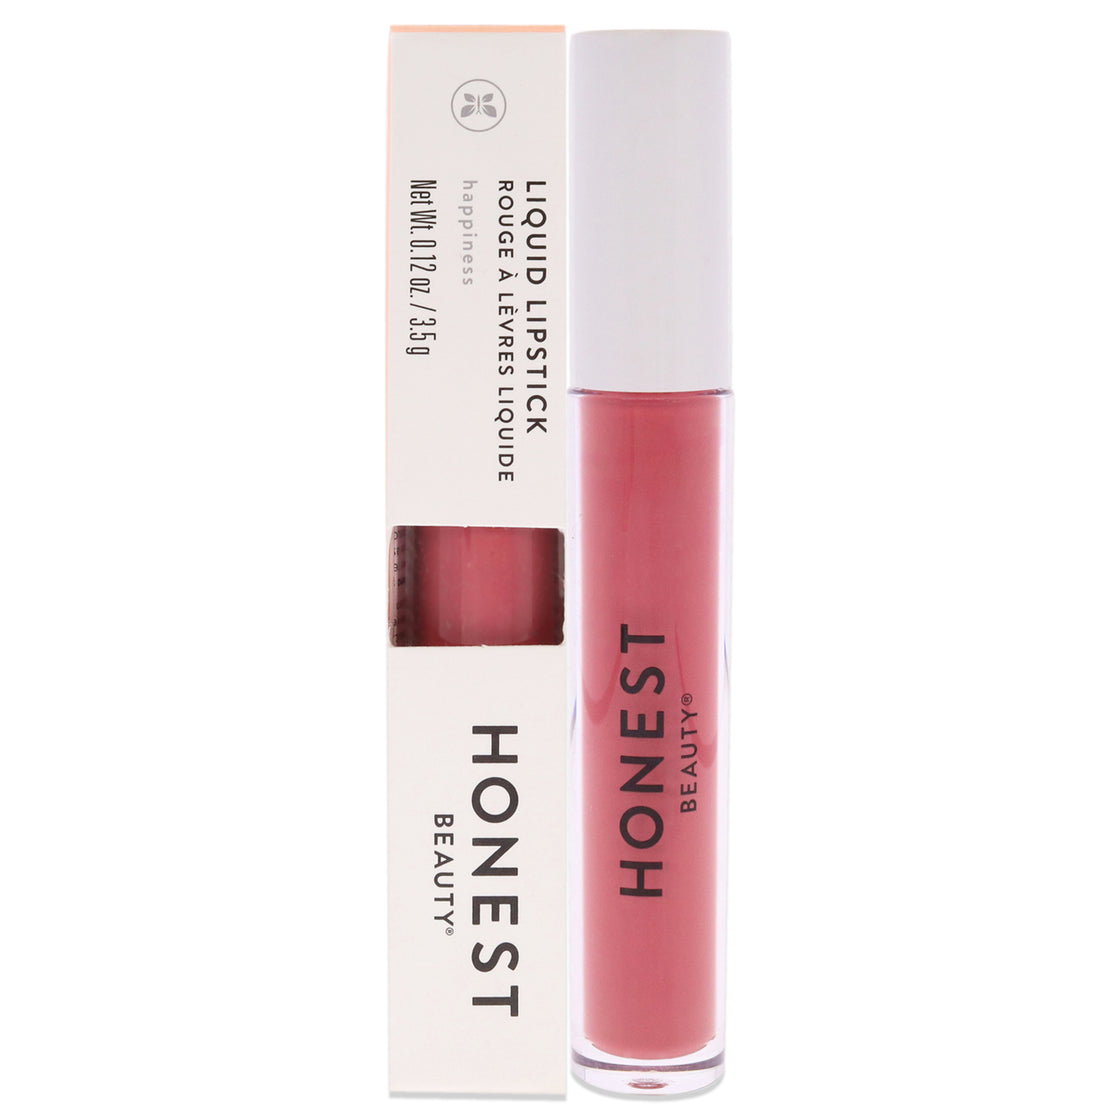 Liquid Lipstick - Happiness by Honest for Women - 0.12 oz Lipstick